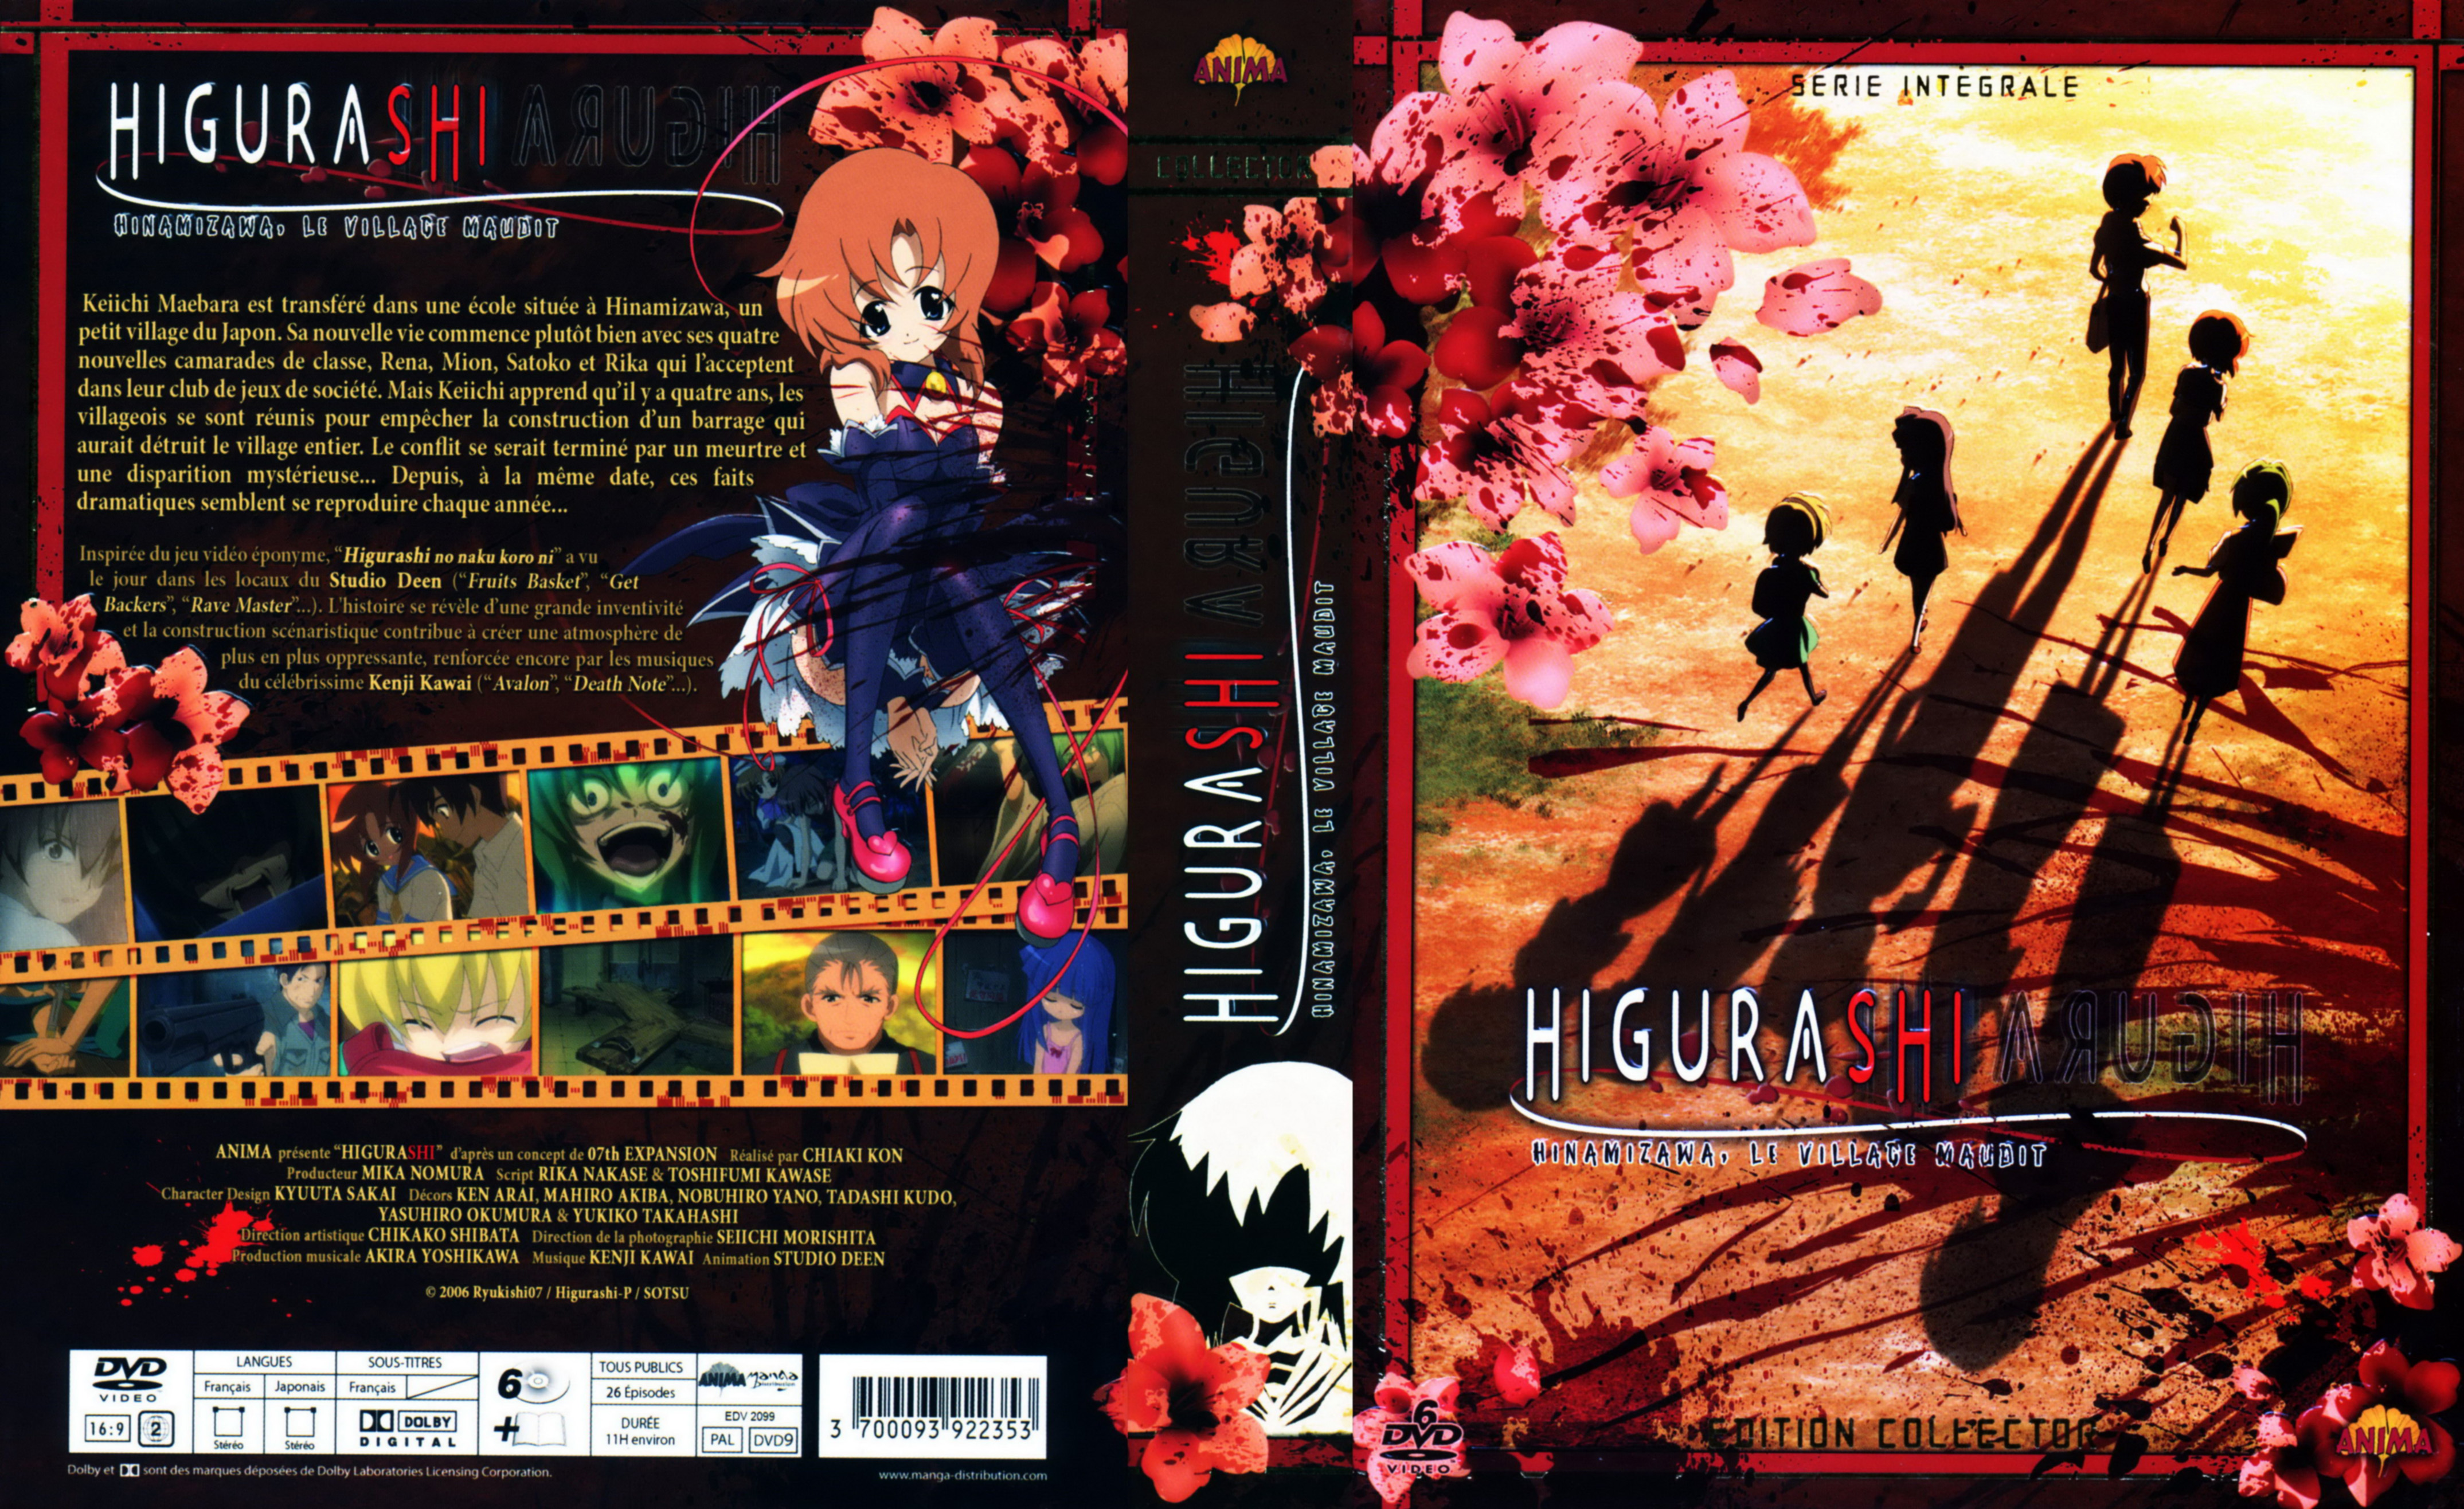 Jaquette DVD Higurashi COFFRET